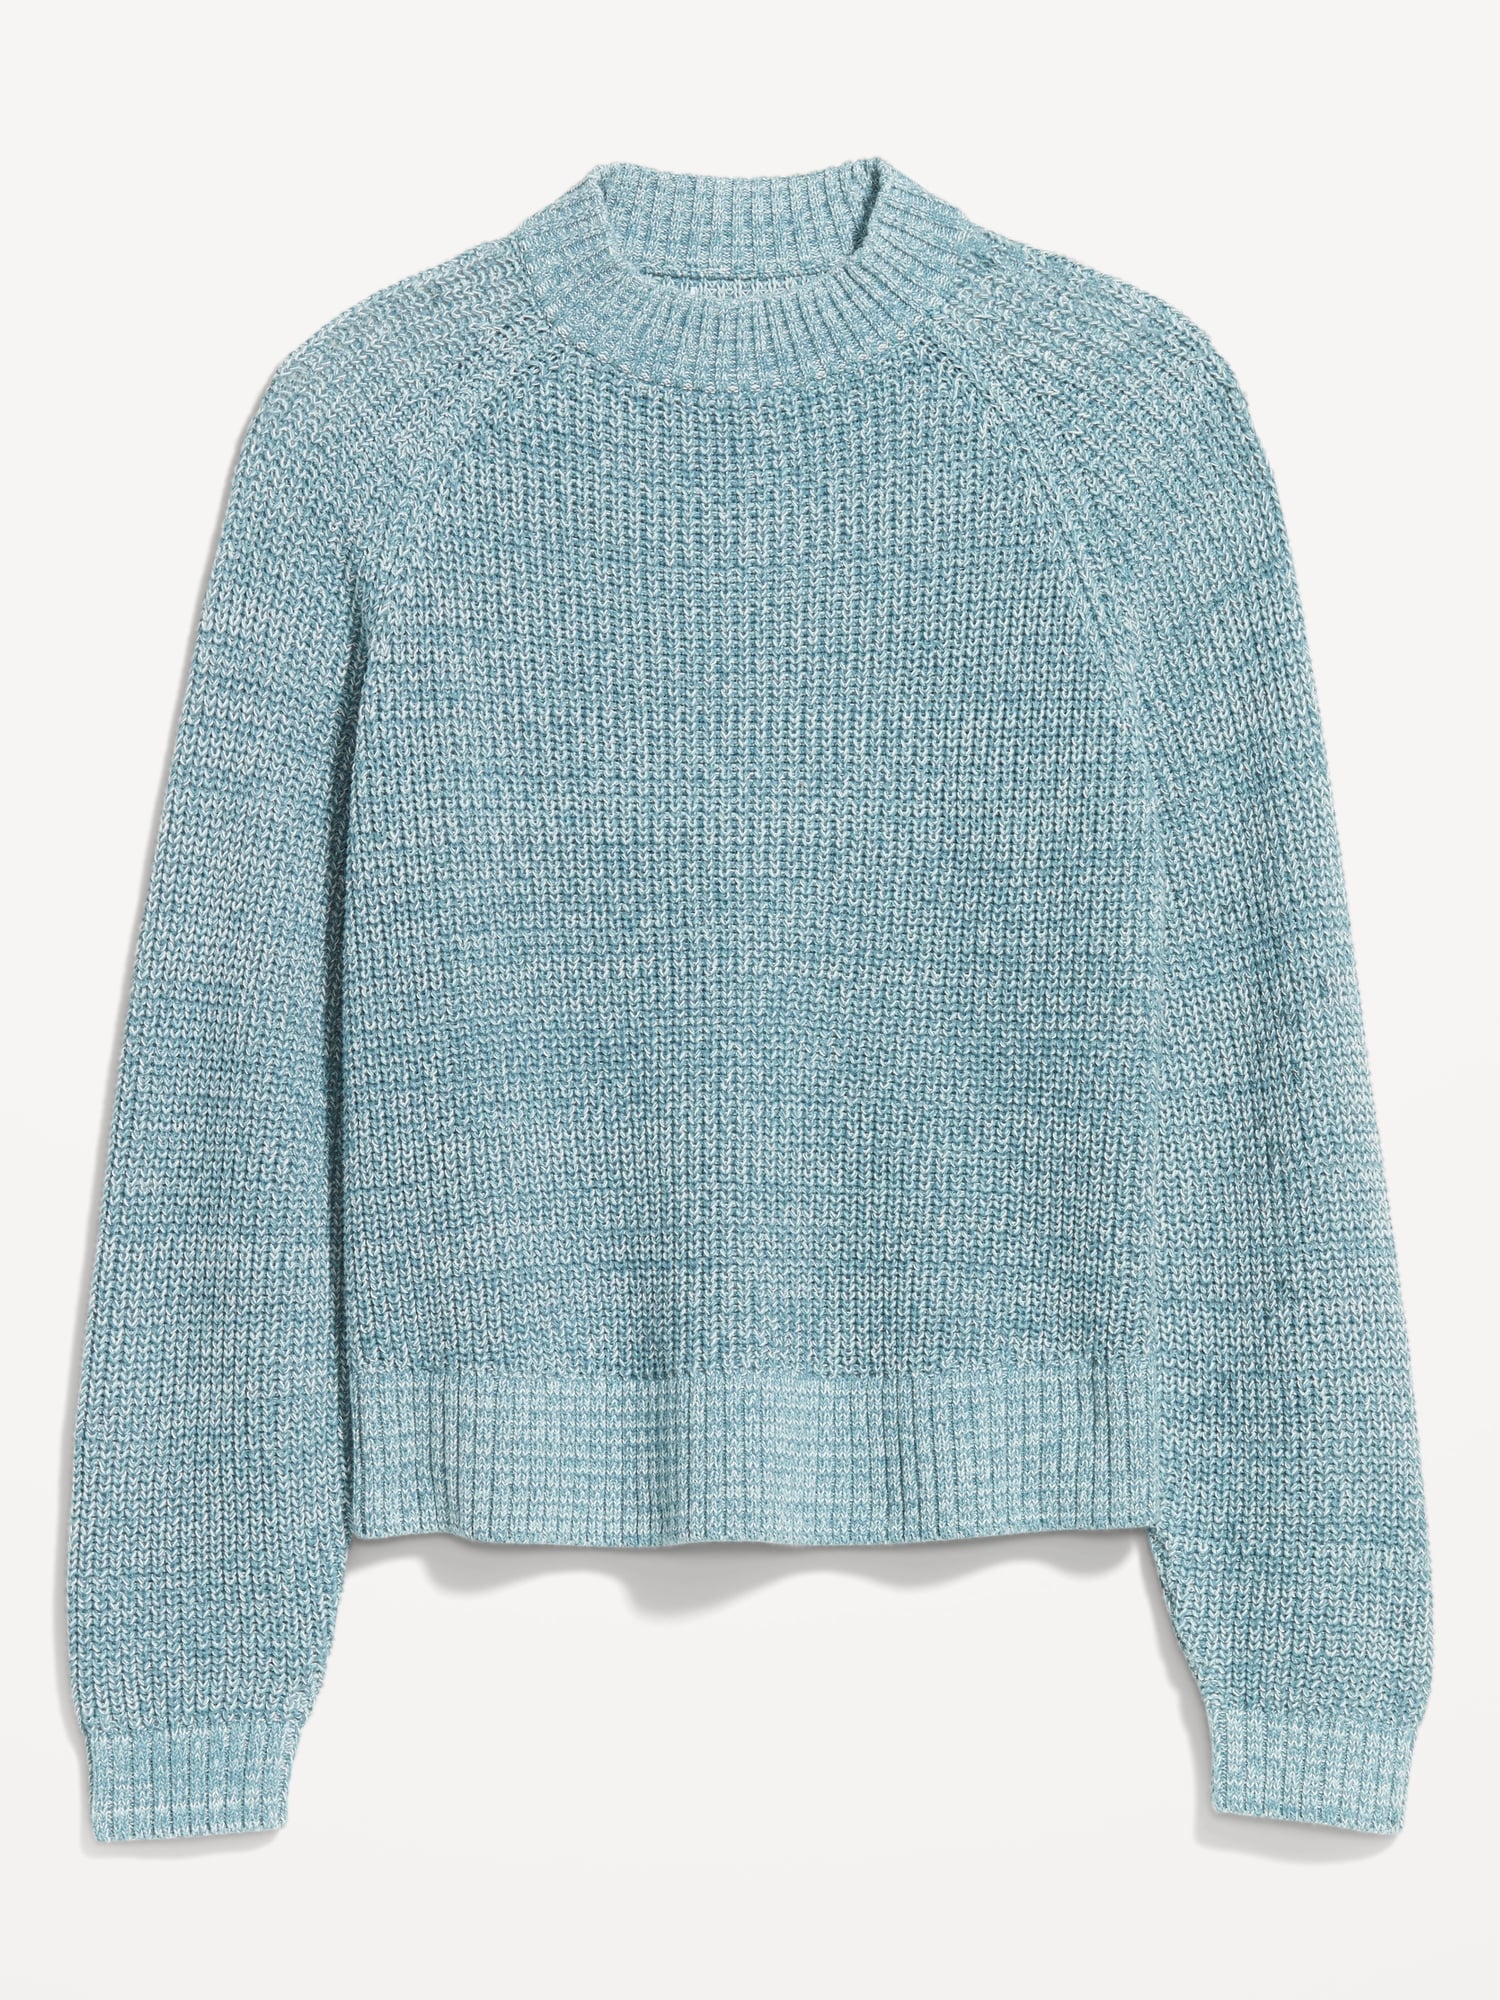 Shaker-Stitch Sweater